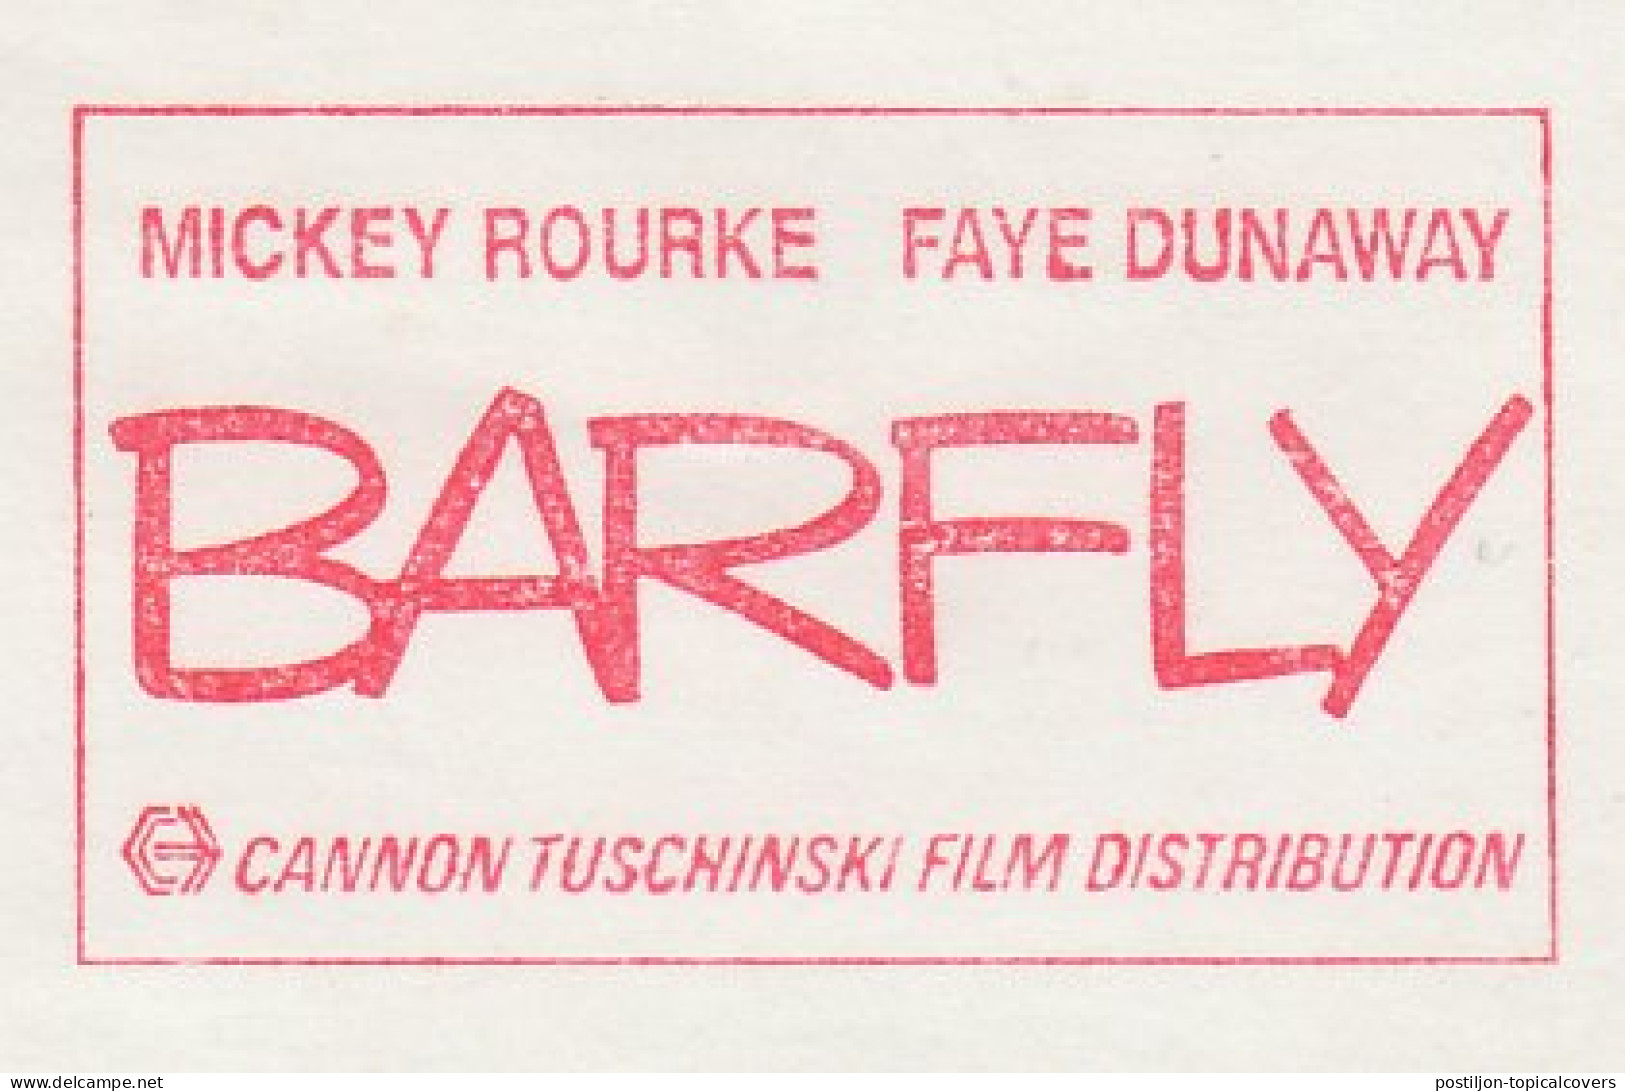 Meter Cut Netherlands 1988 Barfly - Movie - Cinema